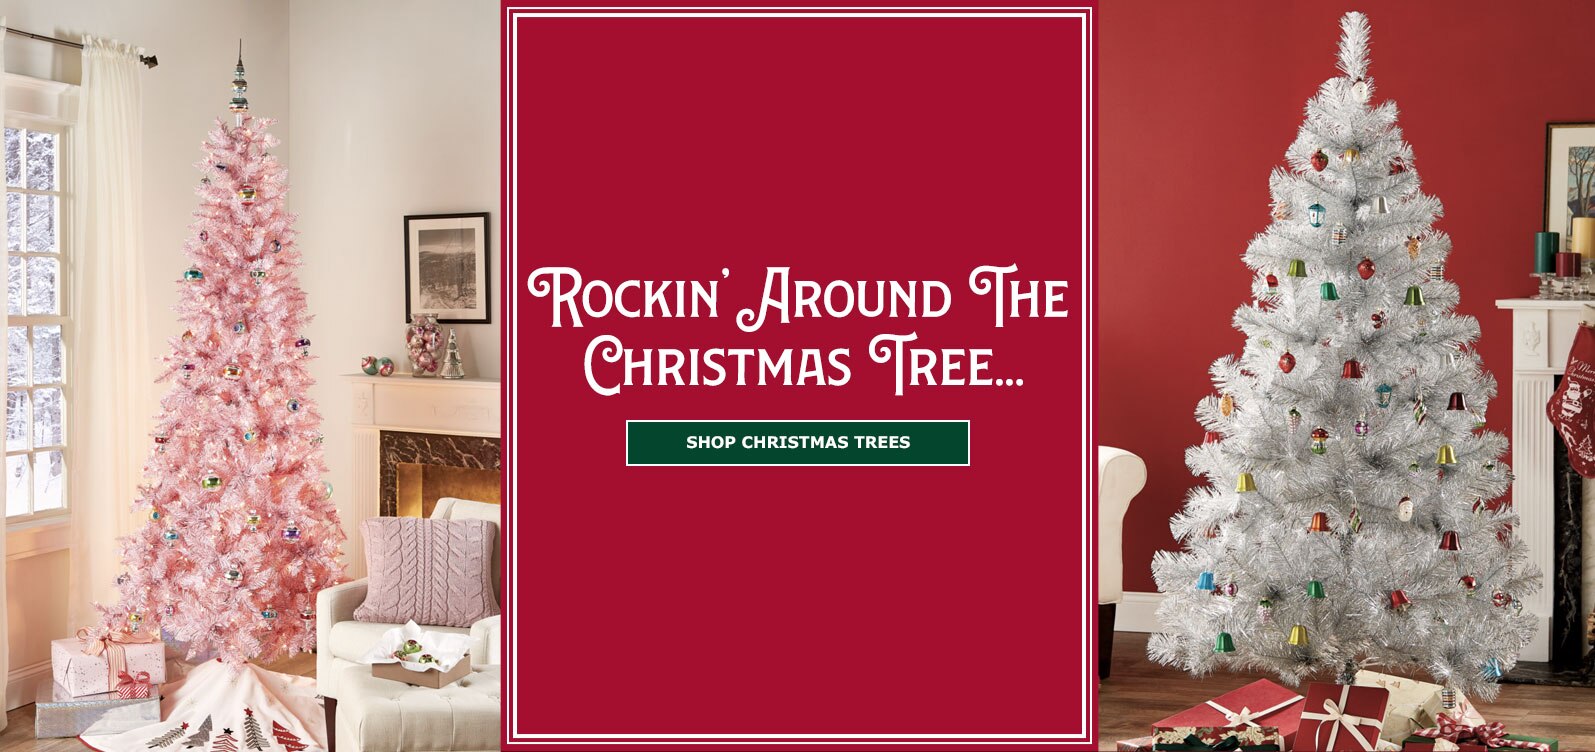 Montana Pine Artificial Christmas Tree, Pre-Lit Nutcracker's Dream Pink Tinsel Christmas Tree, 7.5 Feet